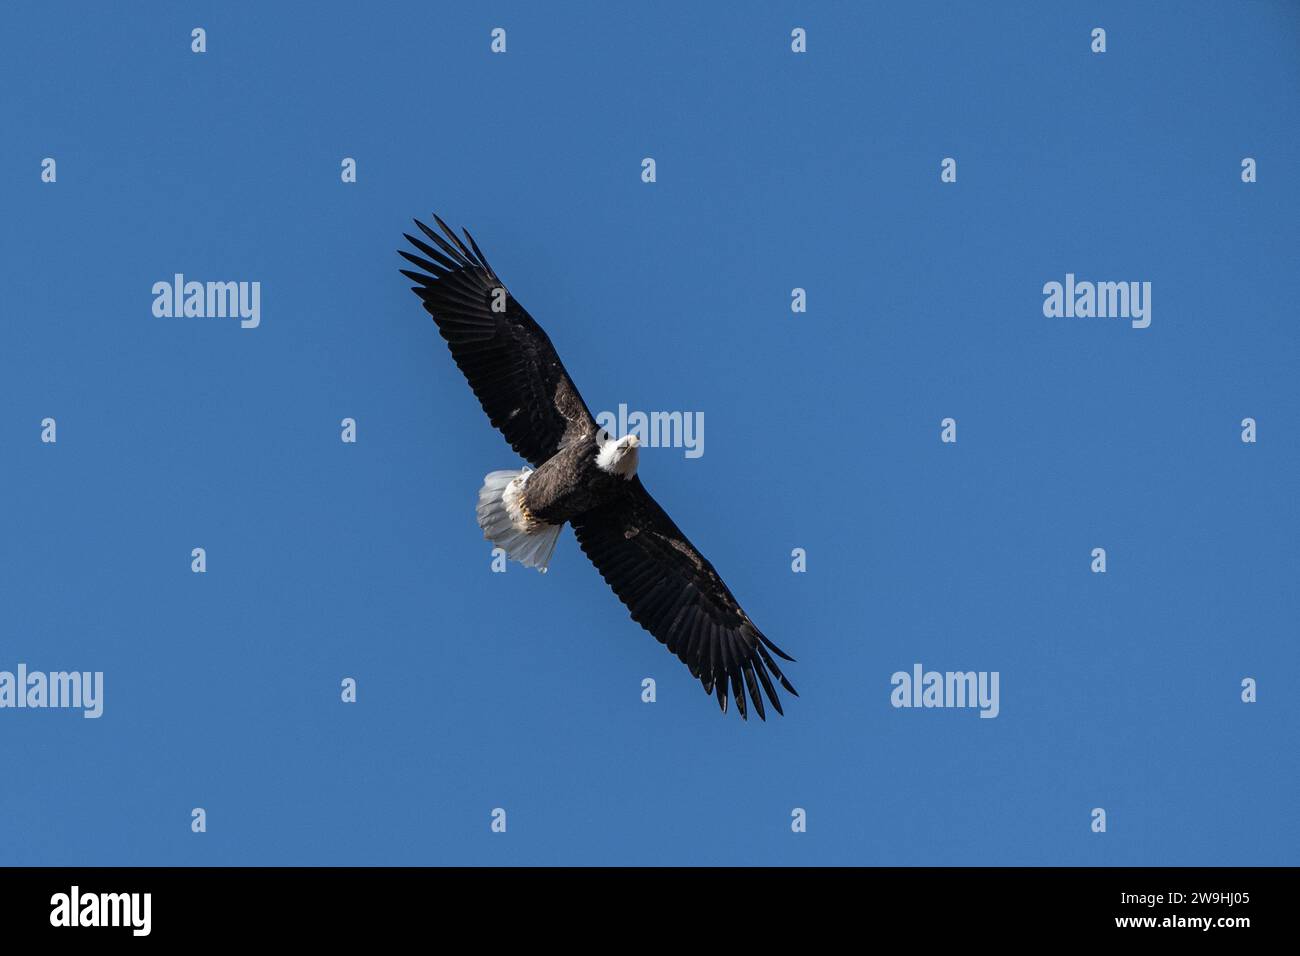 A beautiful adult bald eagle with tilted head (Haliaeetus leucocephalus) flies against a blue-sky background Stock Photo